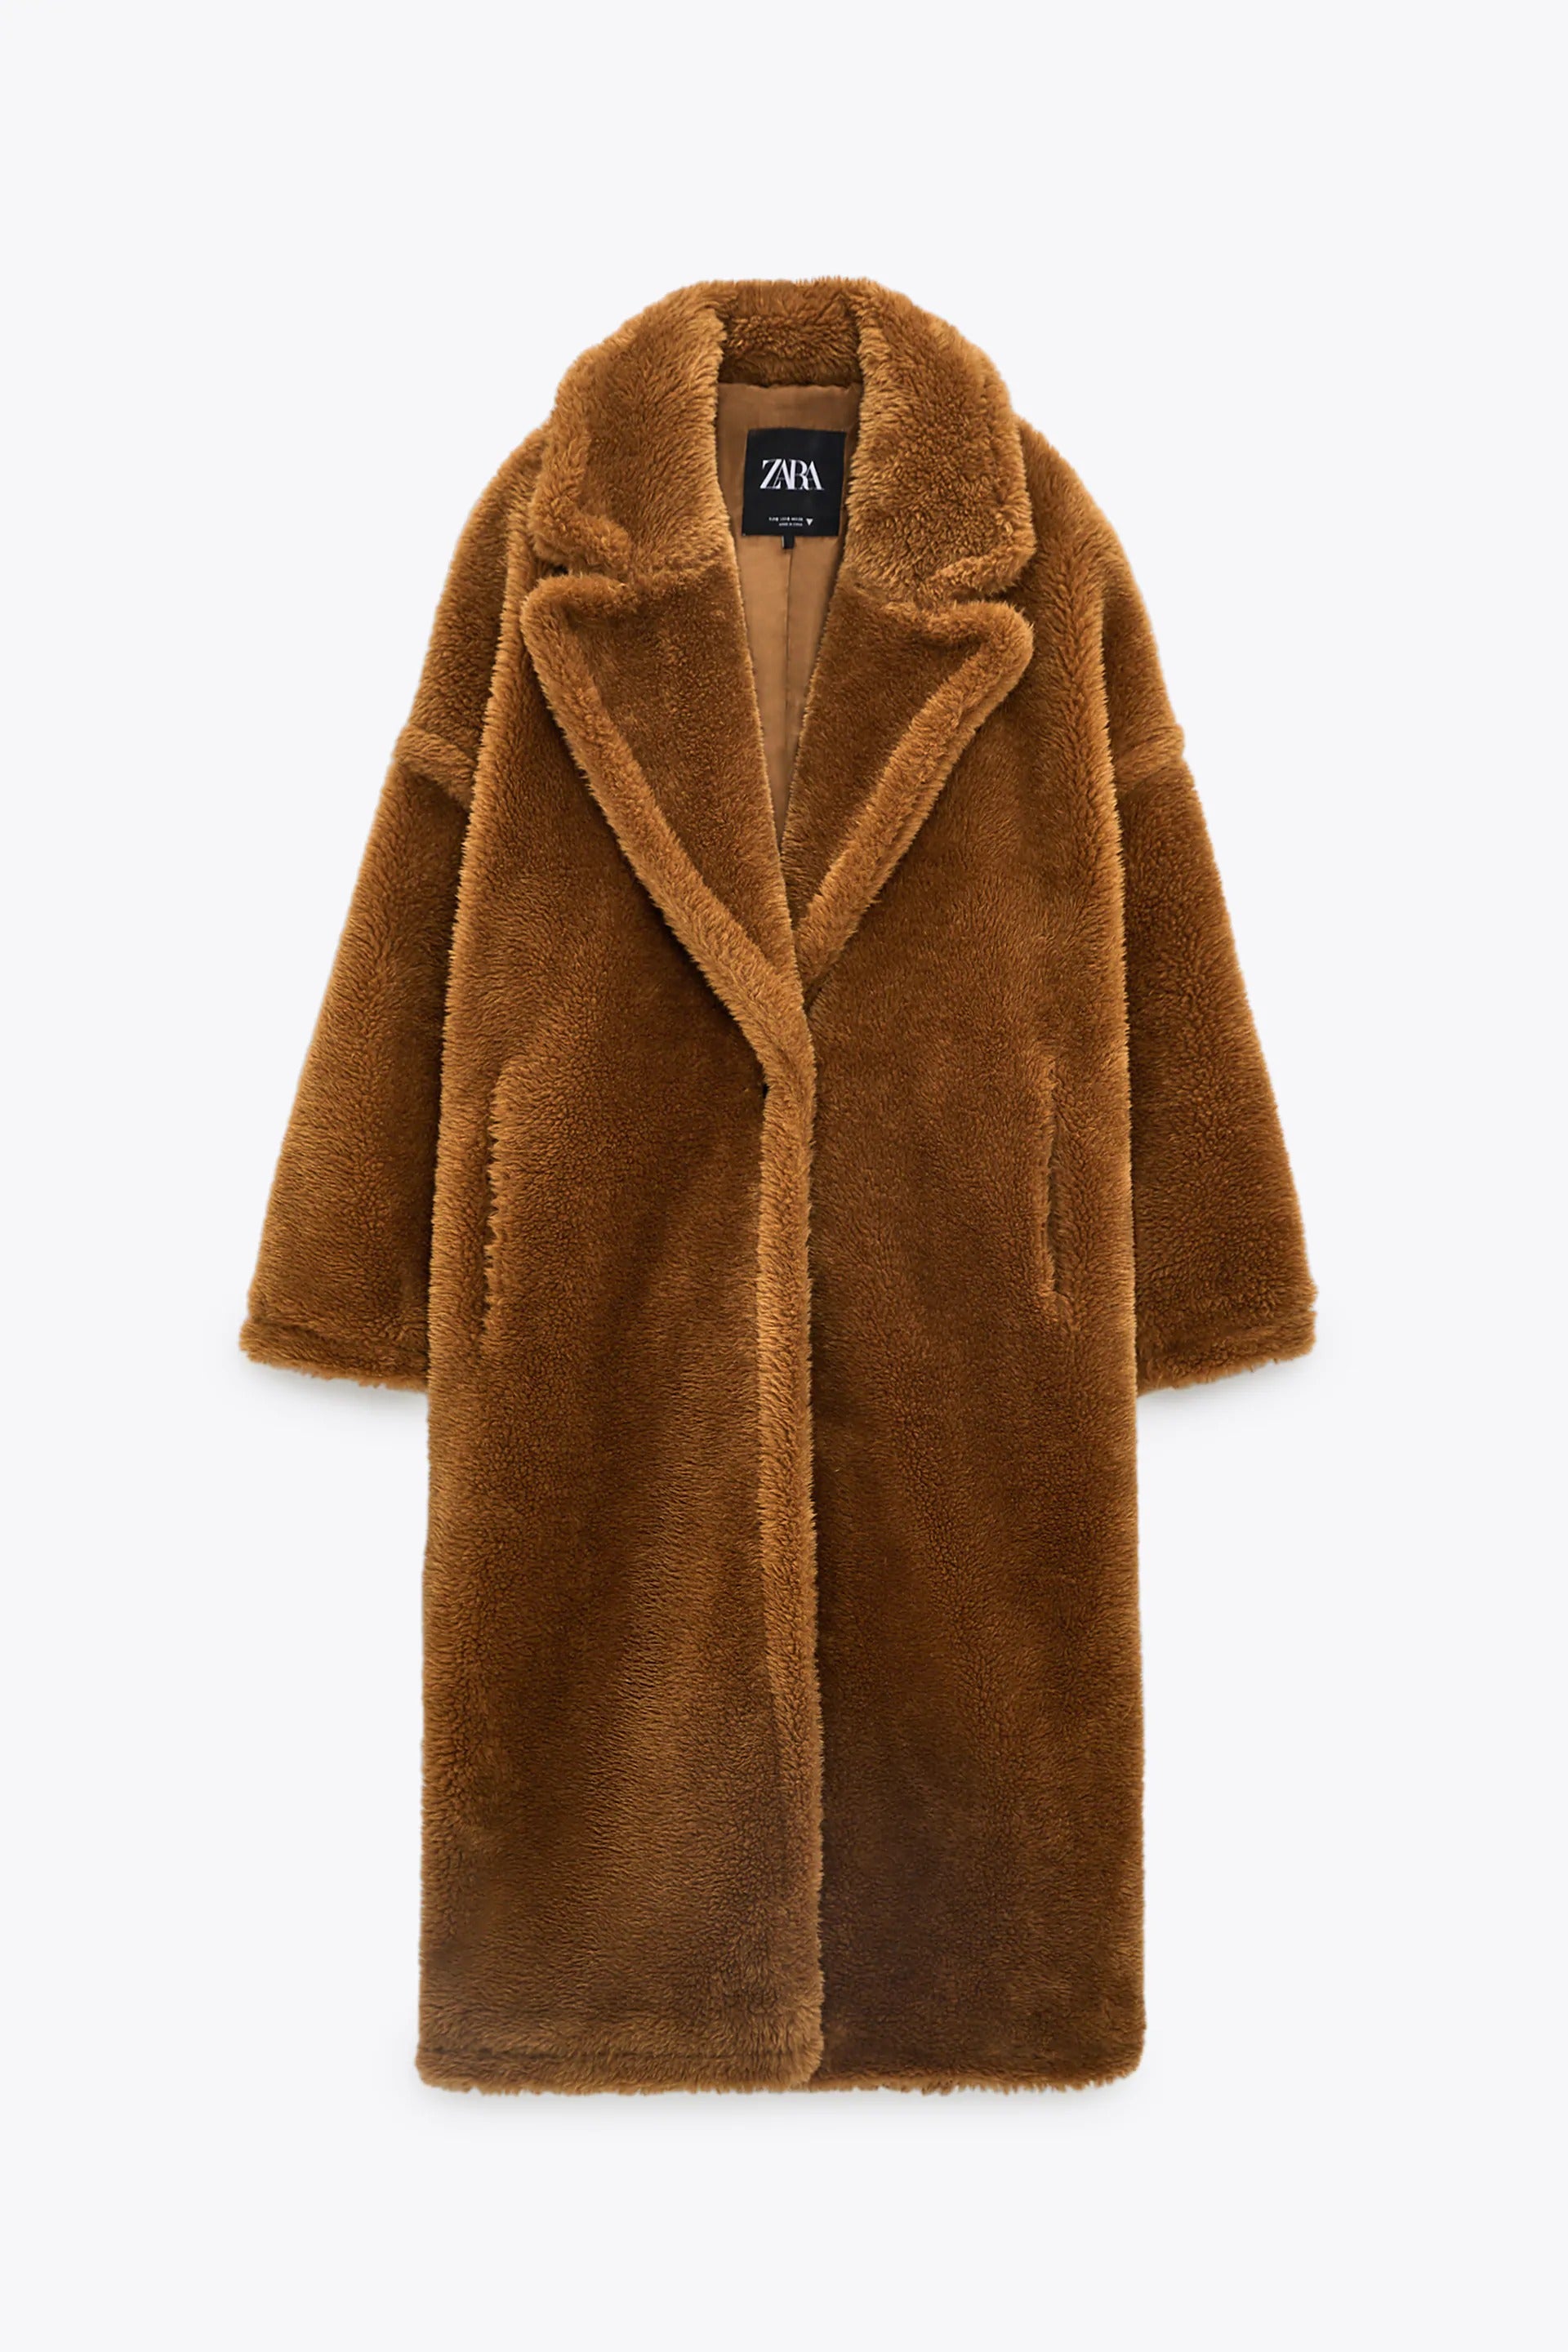 Zara + Coat With Faux Fur